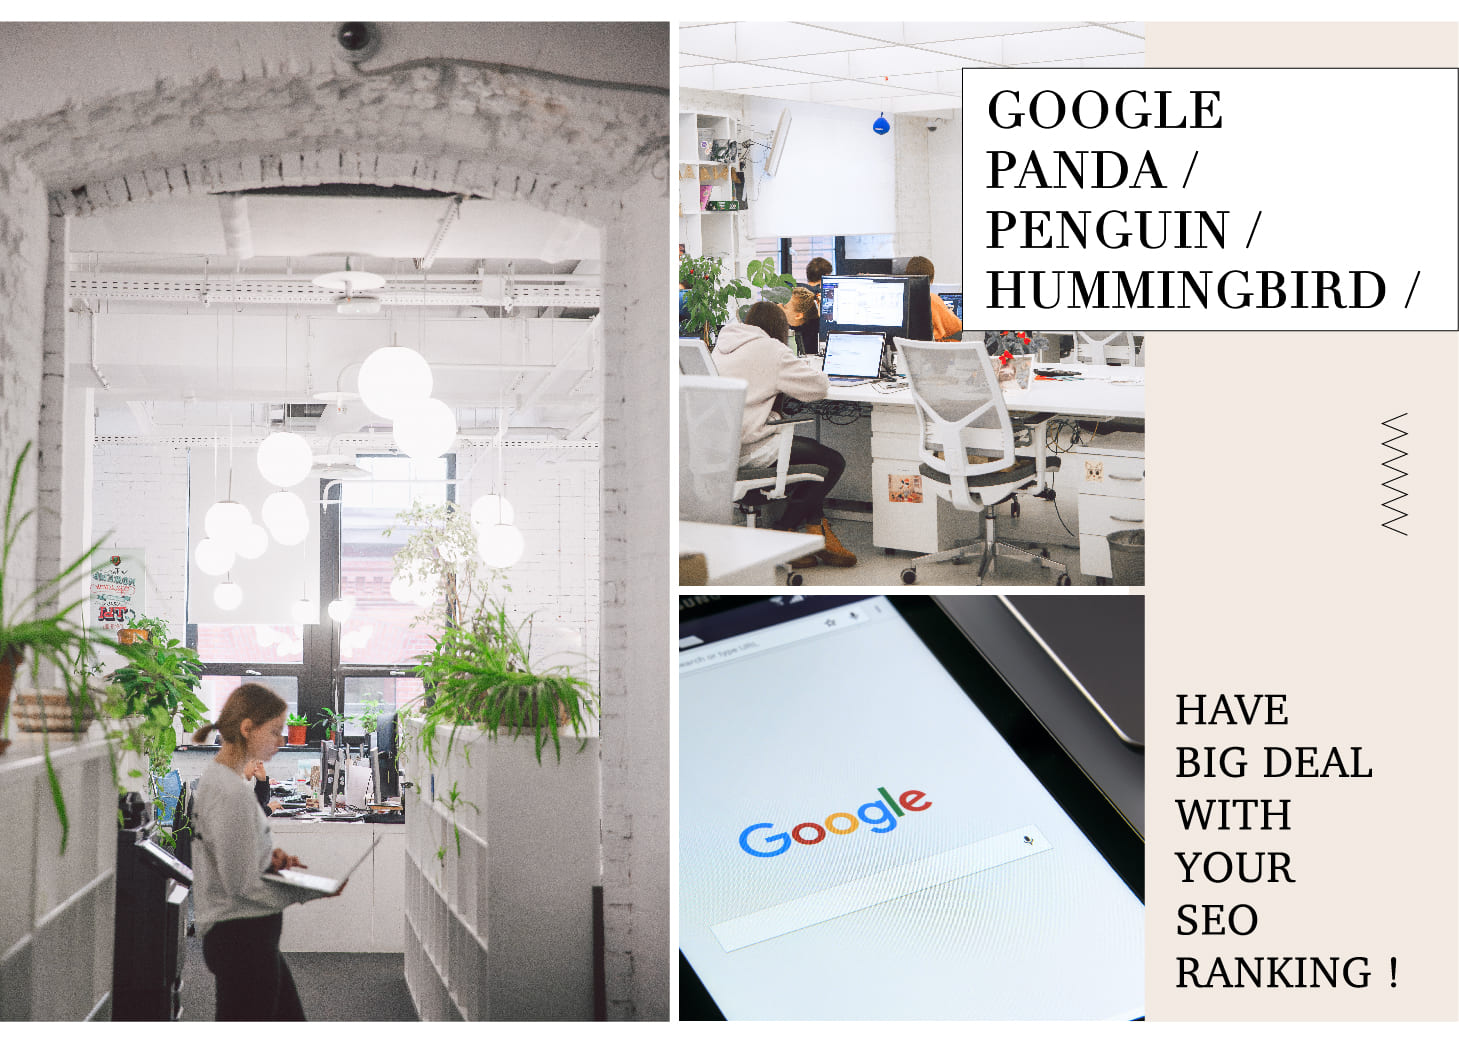 Google Panda/Penguin/Hummingbird have BIG DEAL with your SEO Ranking!SEO幫幫忙！一窺 Google 3大「動物演算法」秘密：熊貓、企鵝、蜂鳥 黑帽SEO、惡意反向連結不吃香